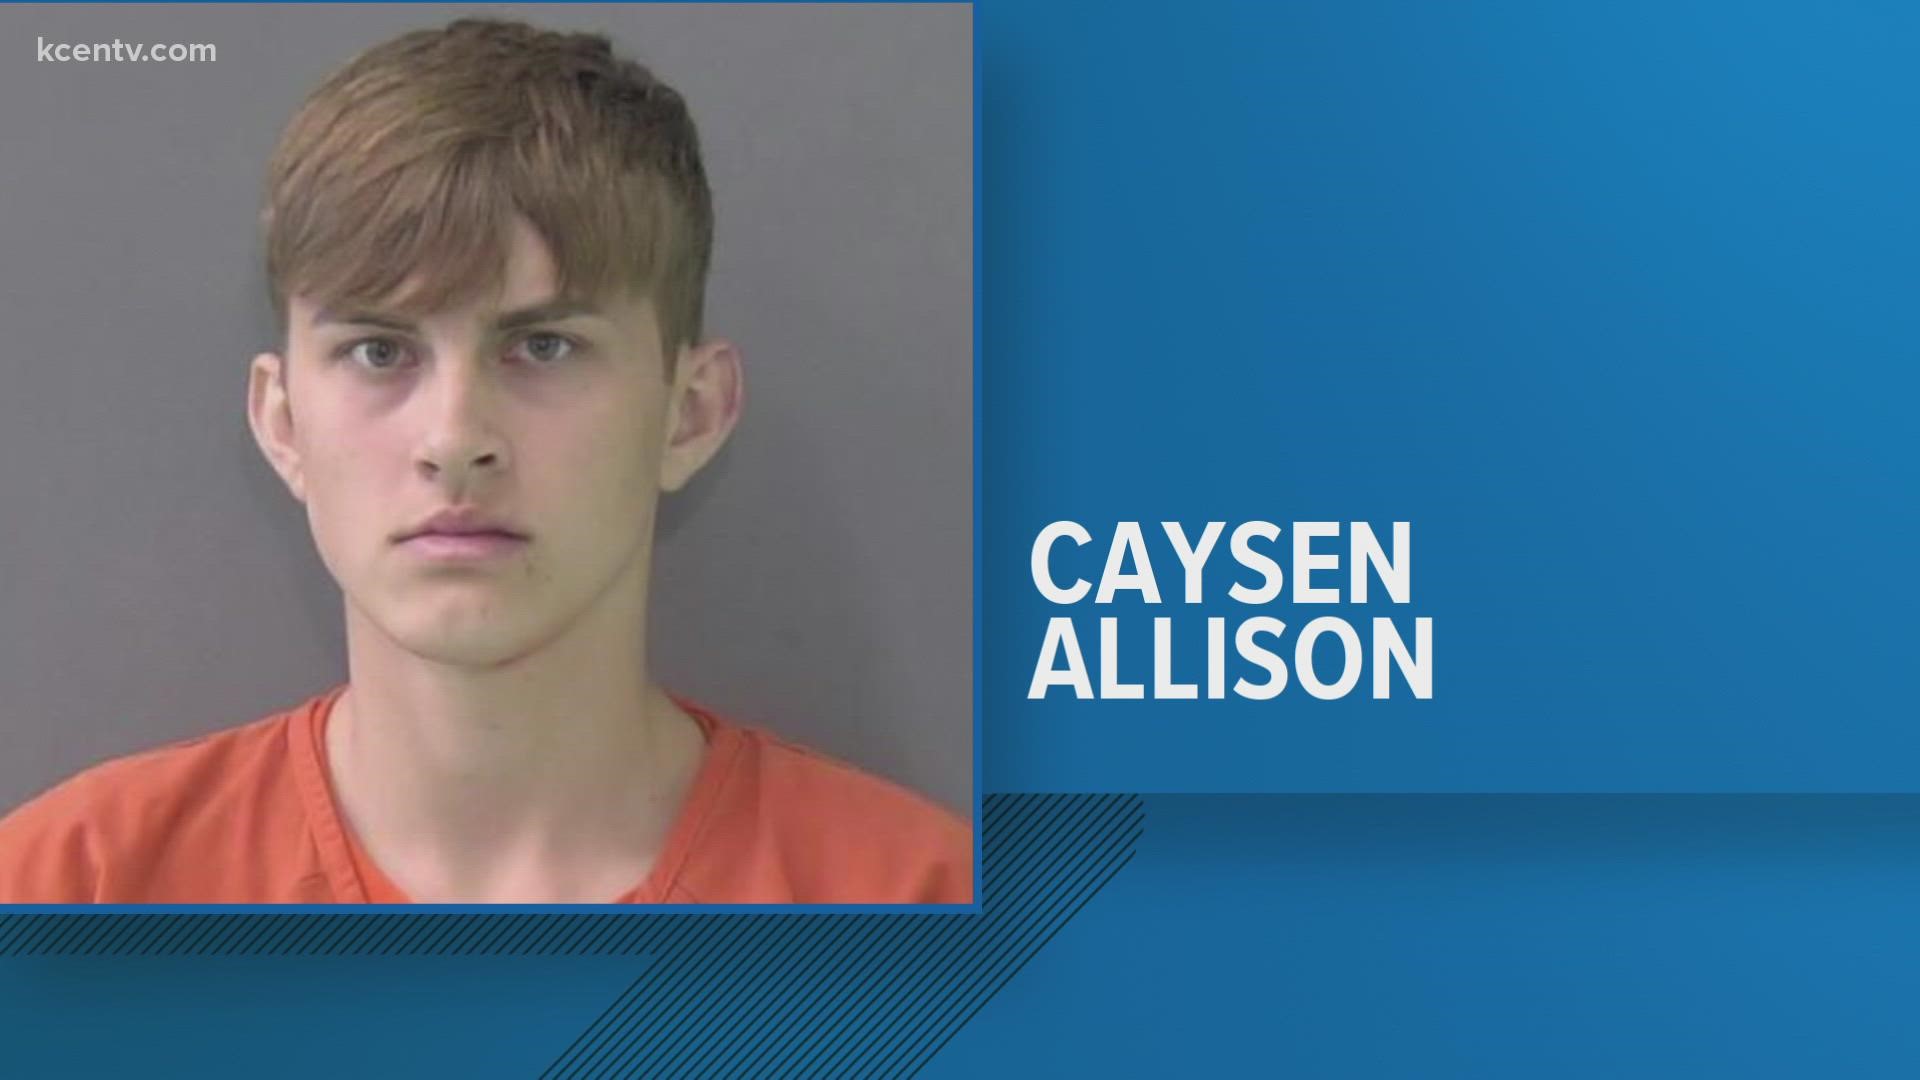 Caysen Allison, 18, is suspected of stabbing and killing fellow student Joe Ramirez, 18.